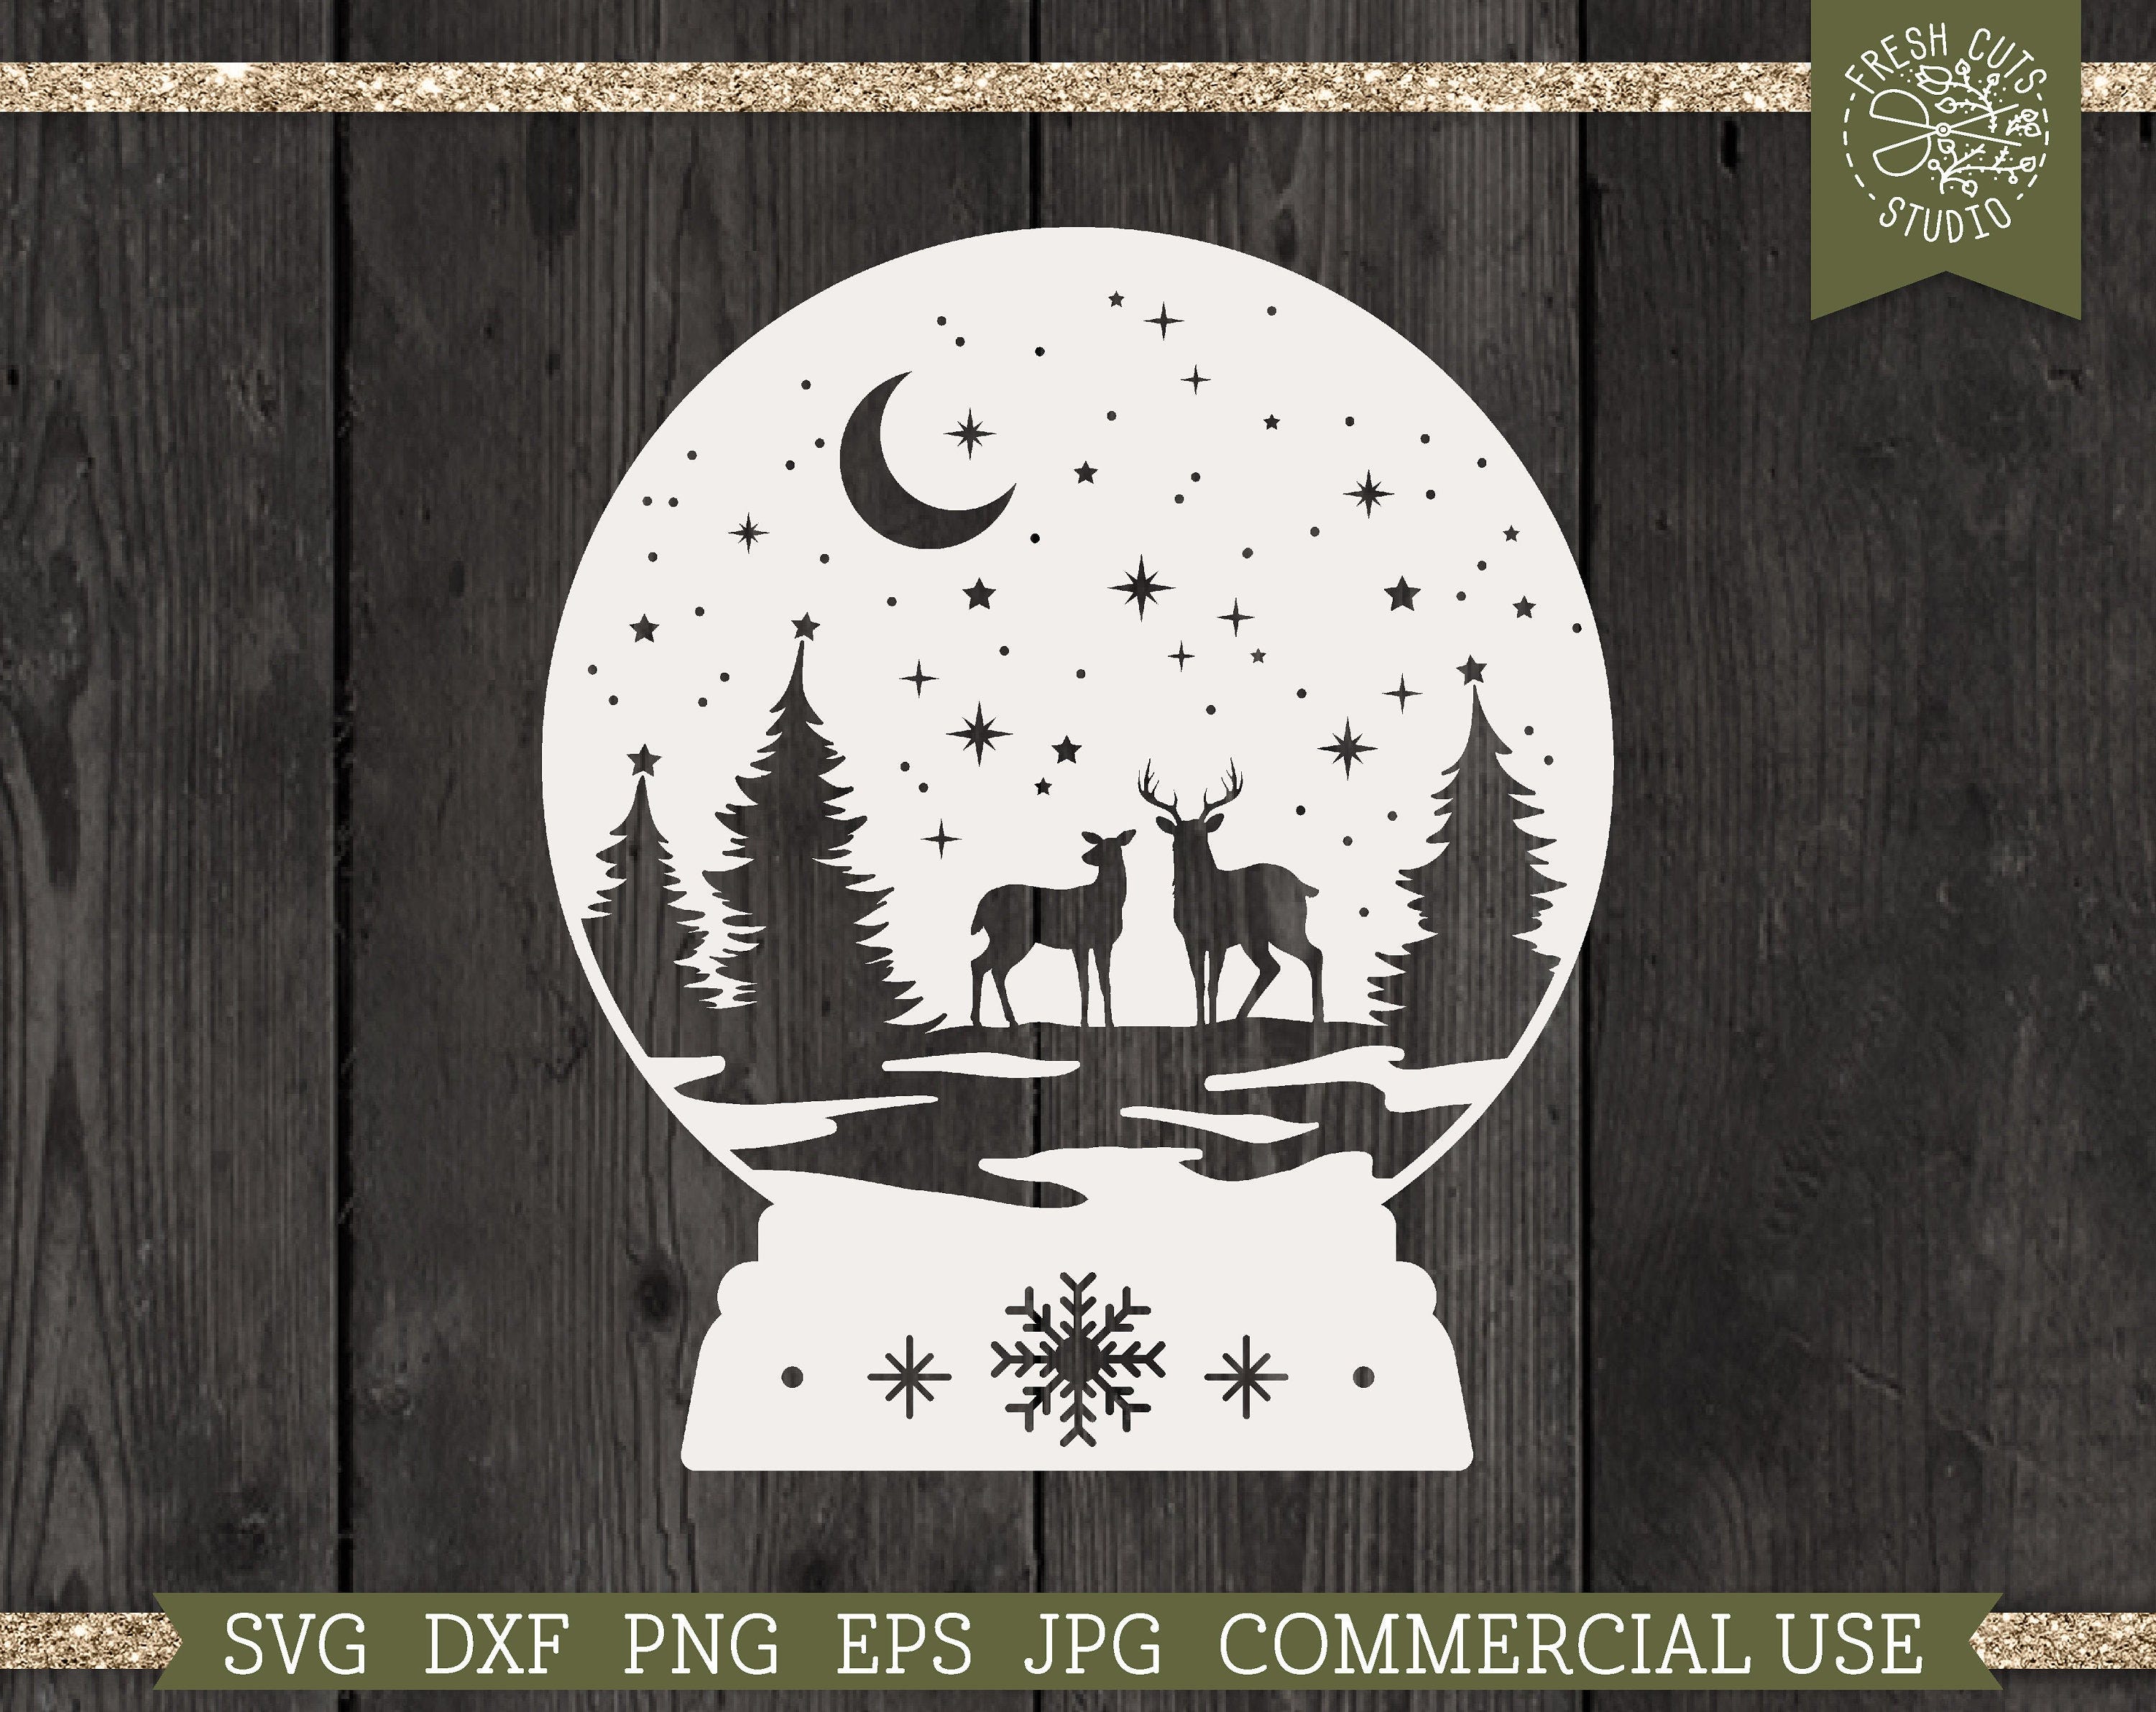 Snowglobe Winter Deer SVG Christmas Scene Cut File, png eps dxf jpg, Starry Moon Pine Tree Forest, Snowy Rustic Christmas, Deer Family SVG